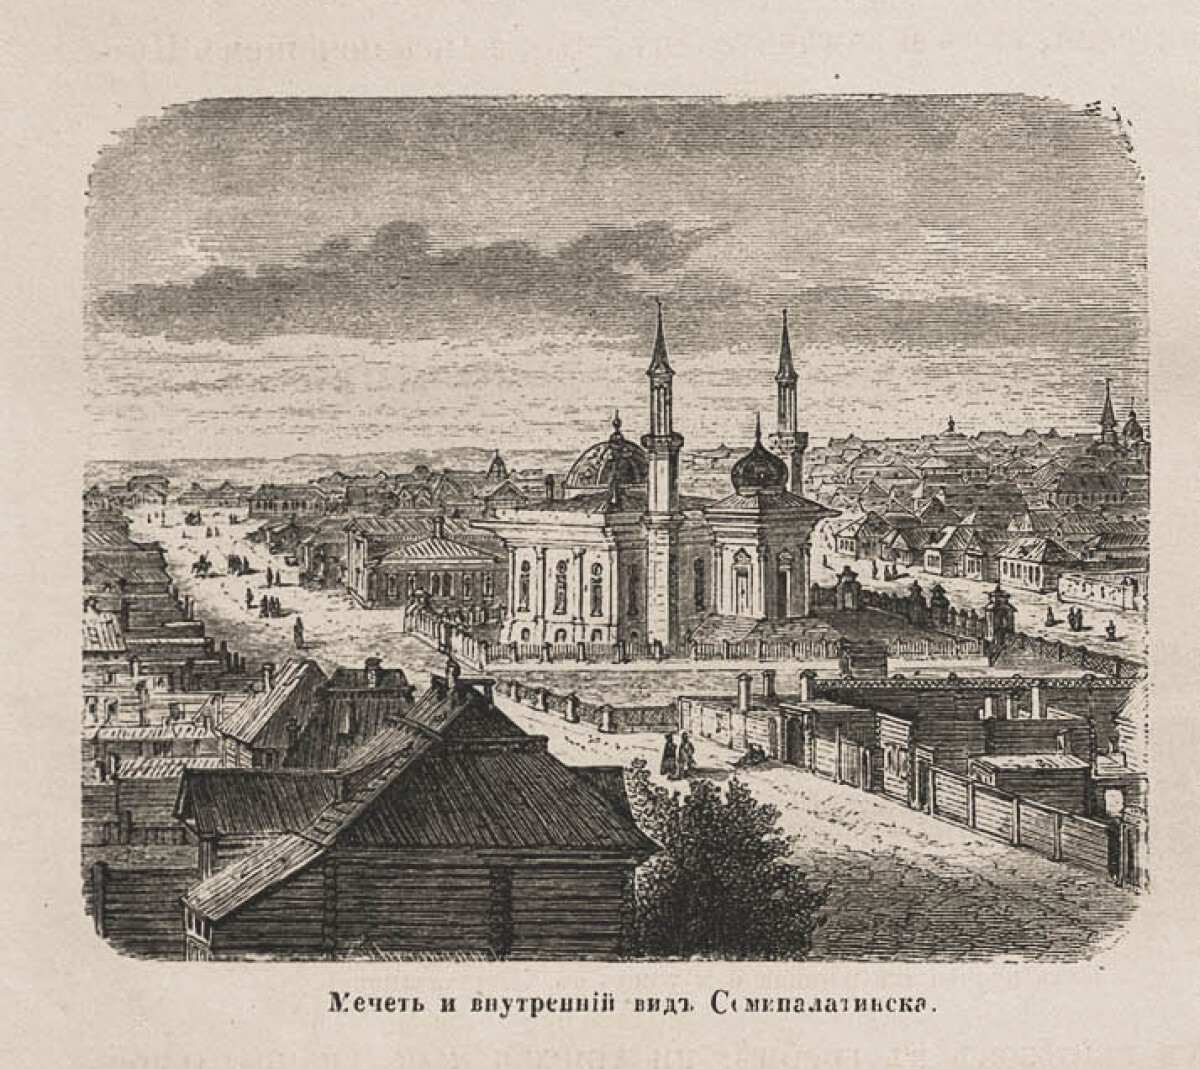 Картина казахской степи 1867 года. Часть 2 - e-history.kz